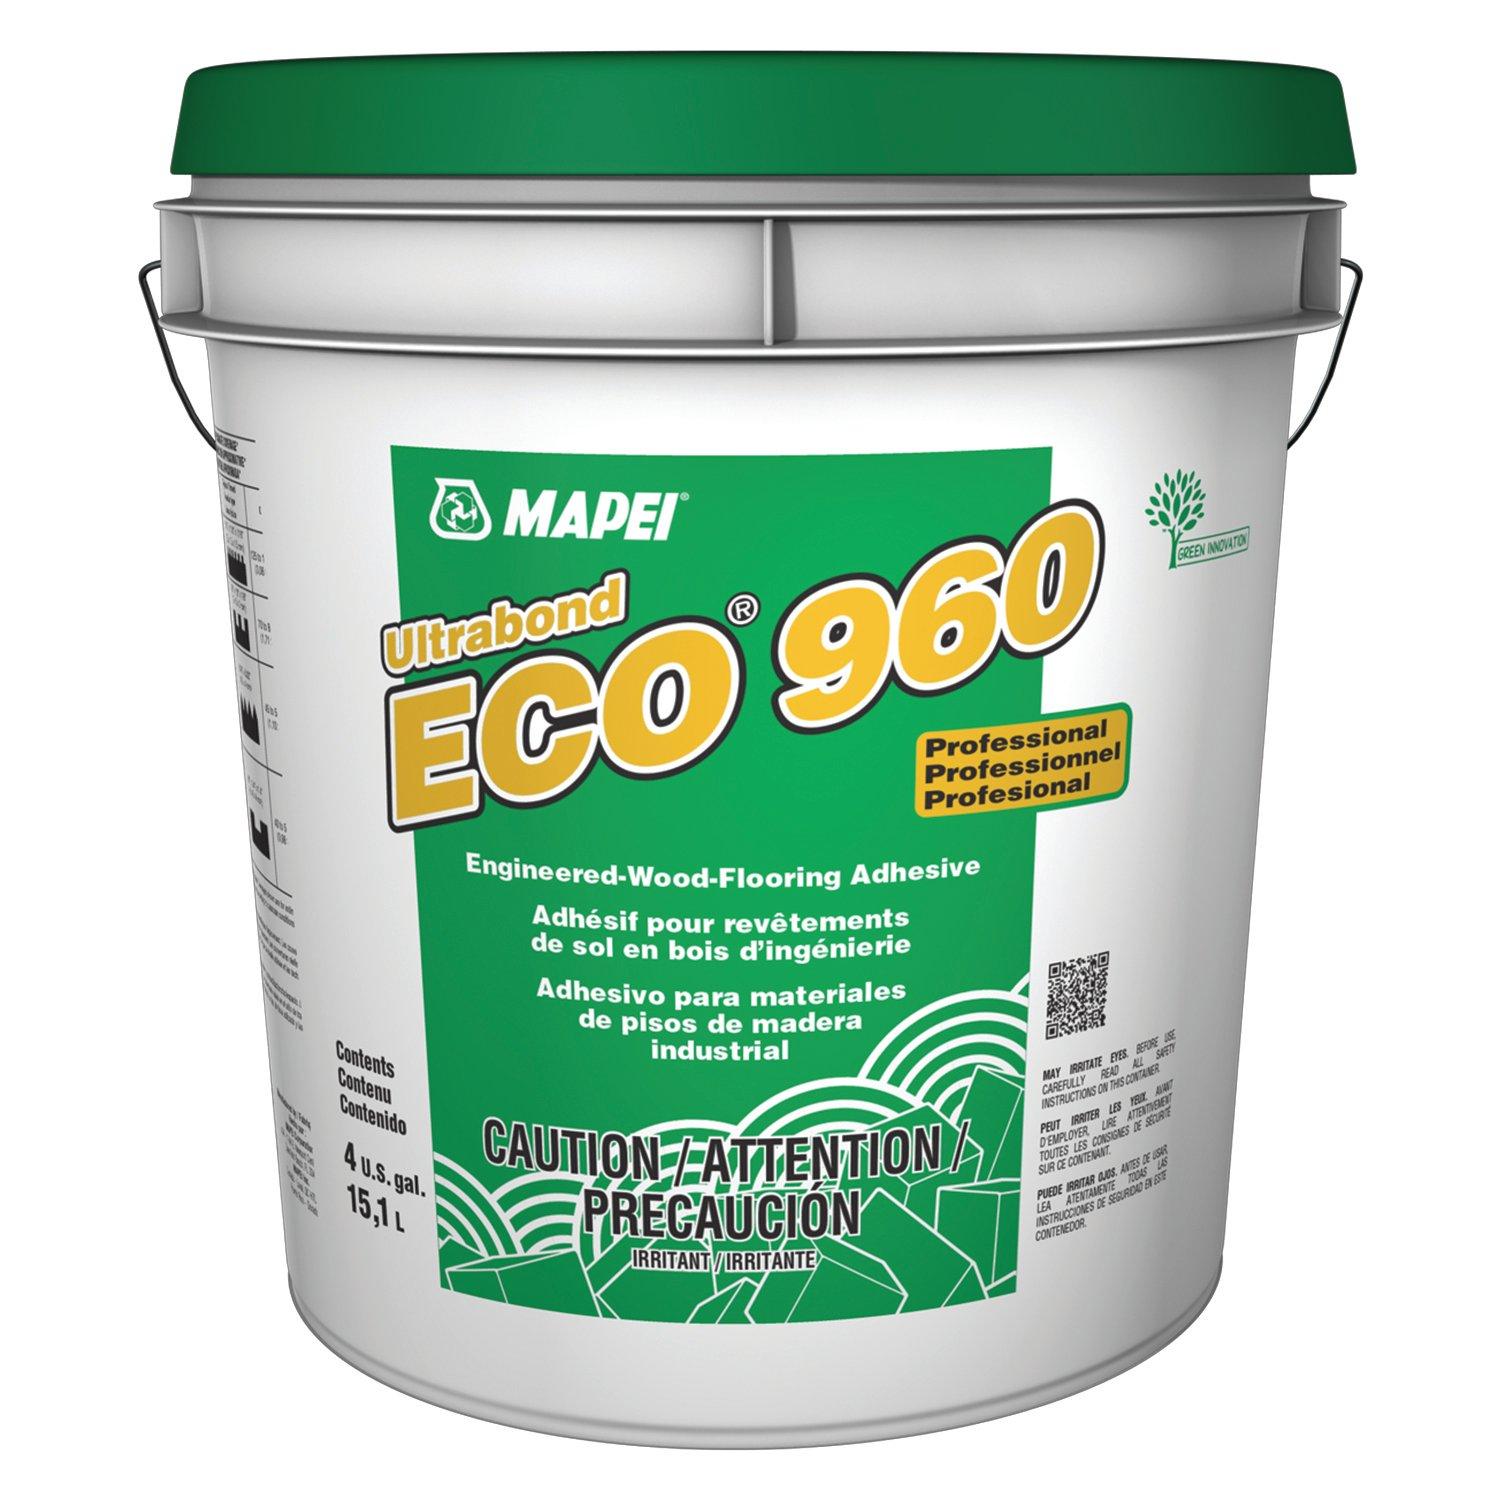 Mapei Ultrabond Eco 960 High-Tack Latex Based Wood Adhesive